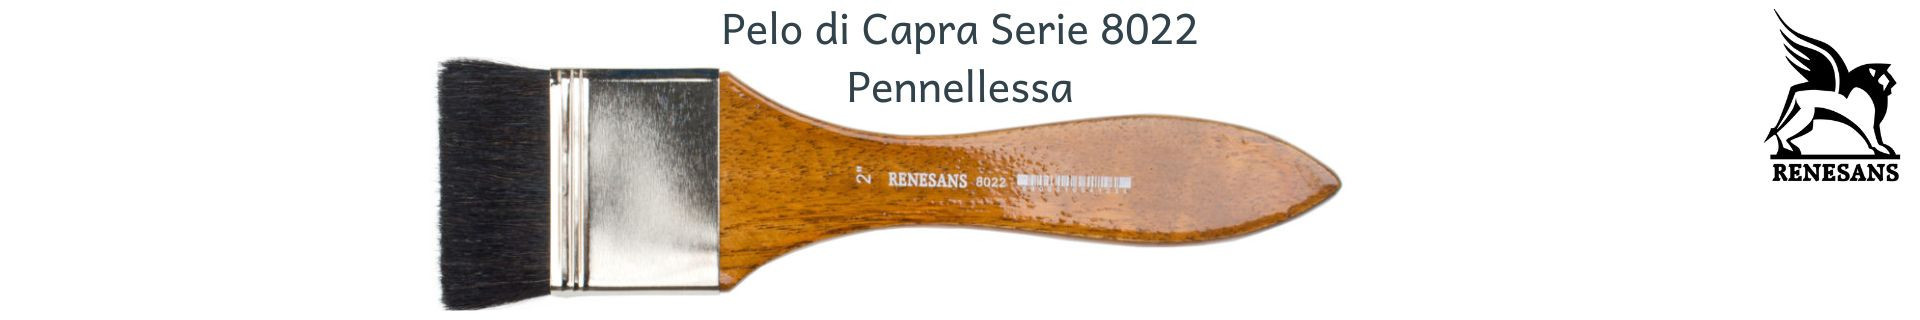 Renesans Pennellessa Serie 8022